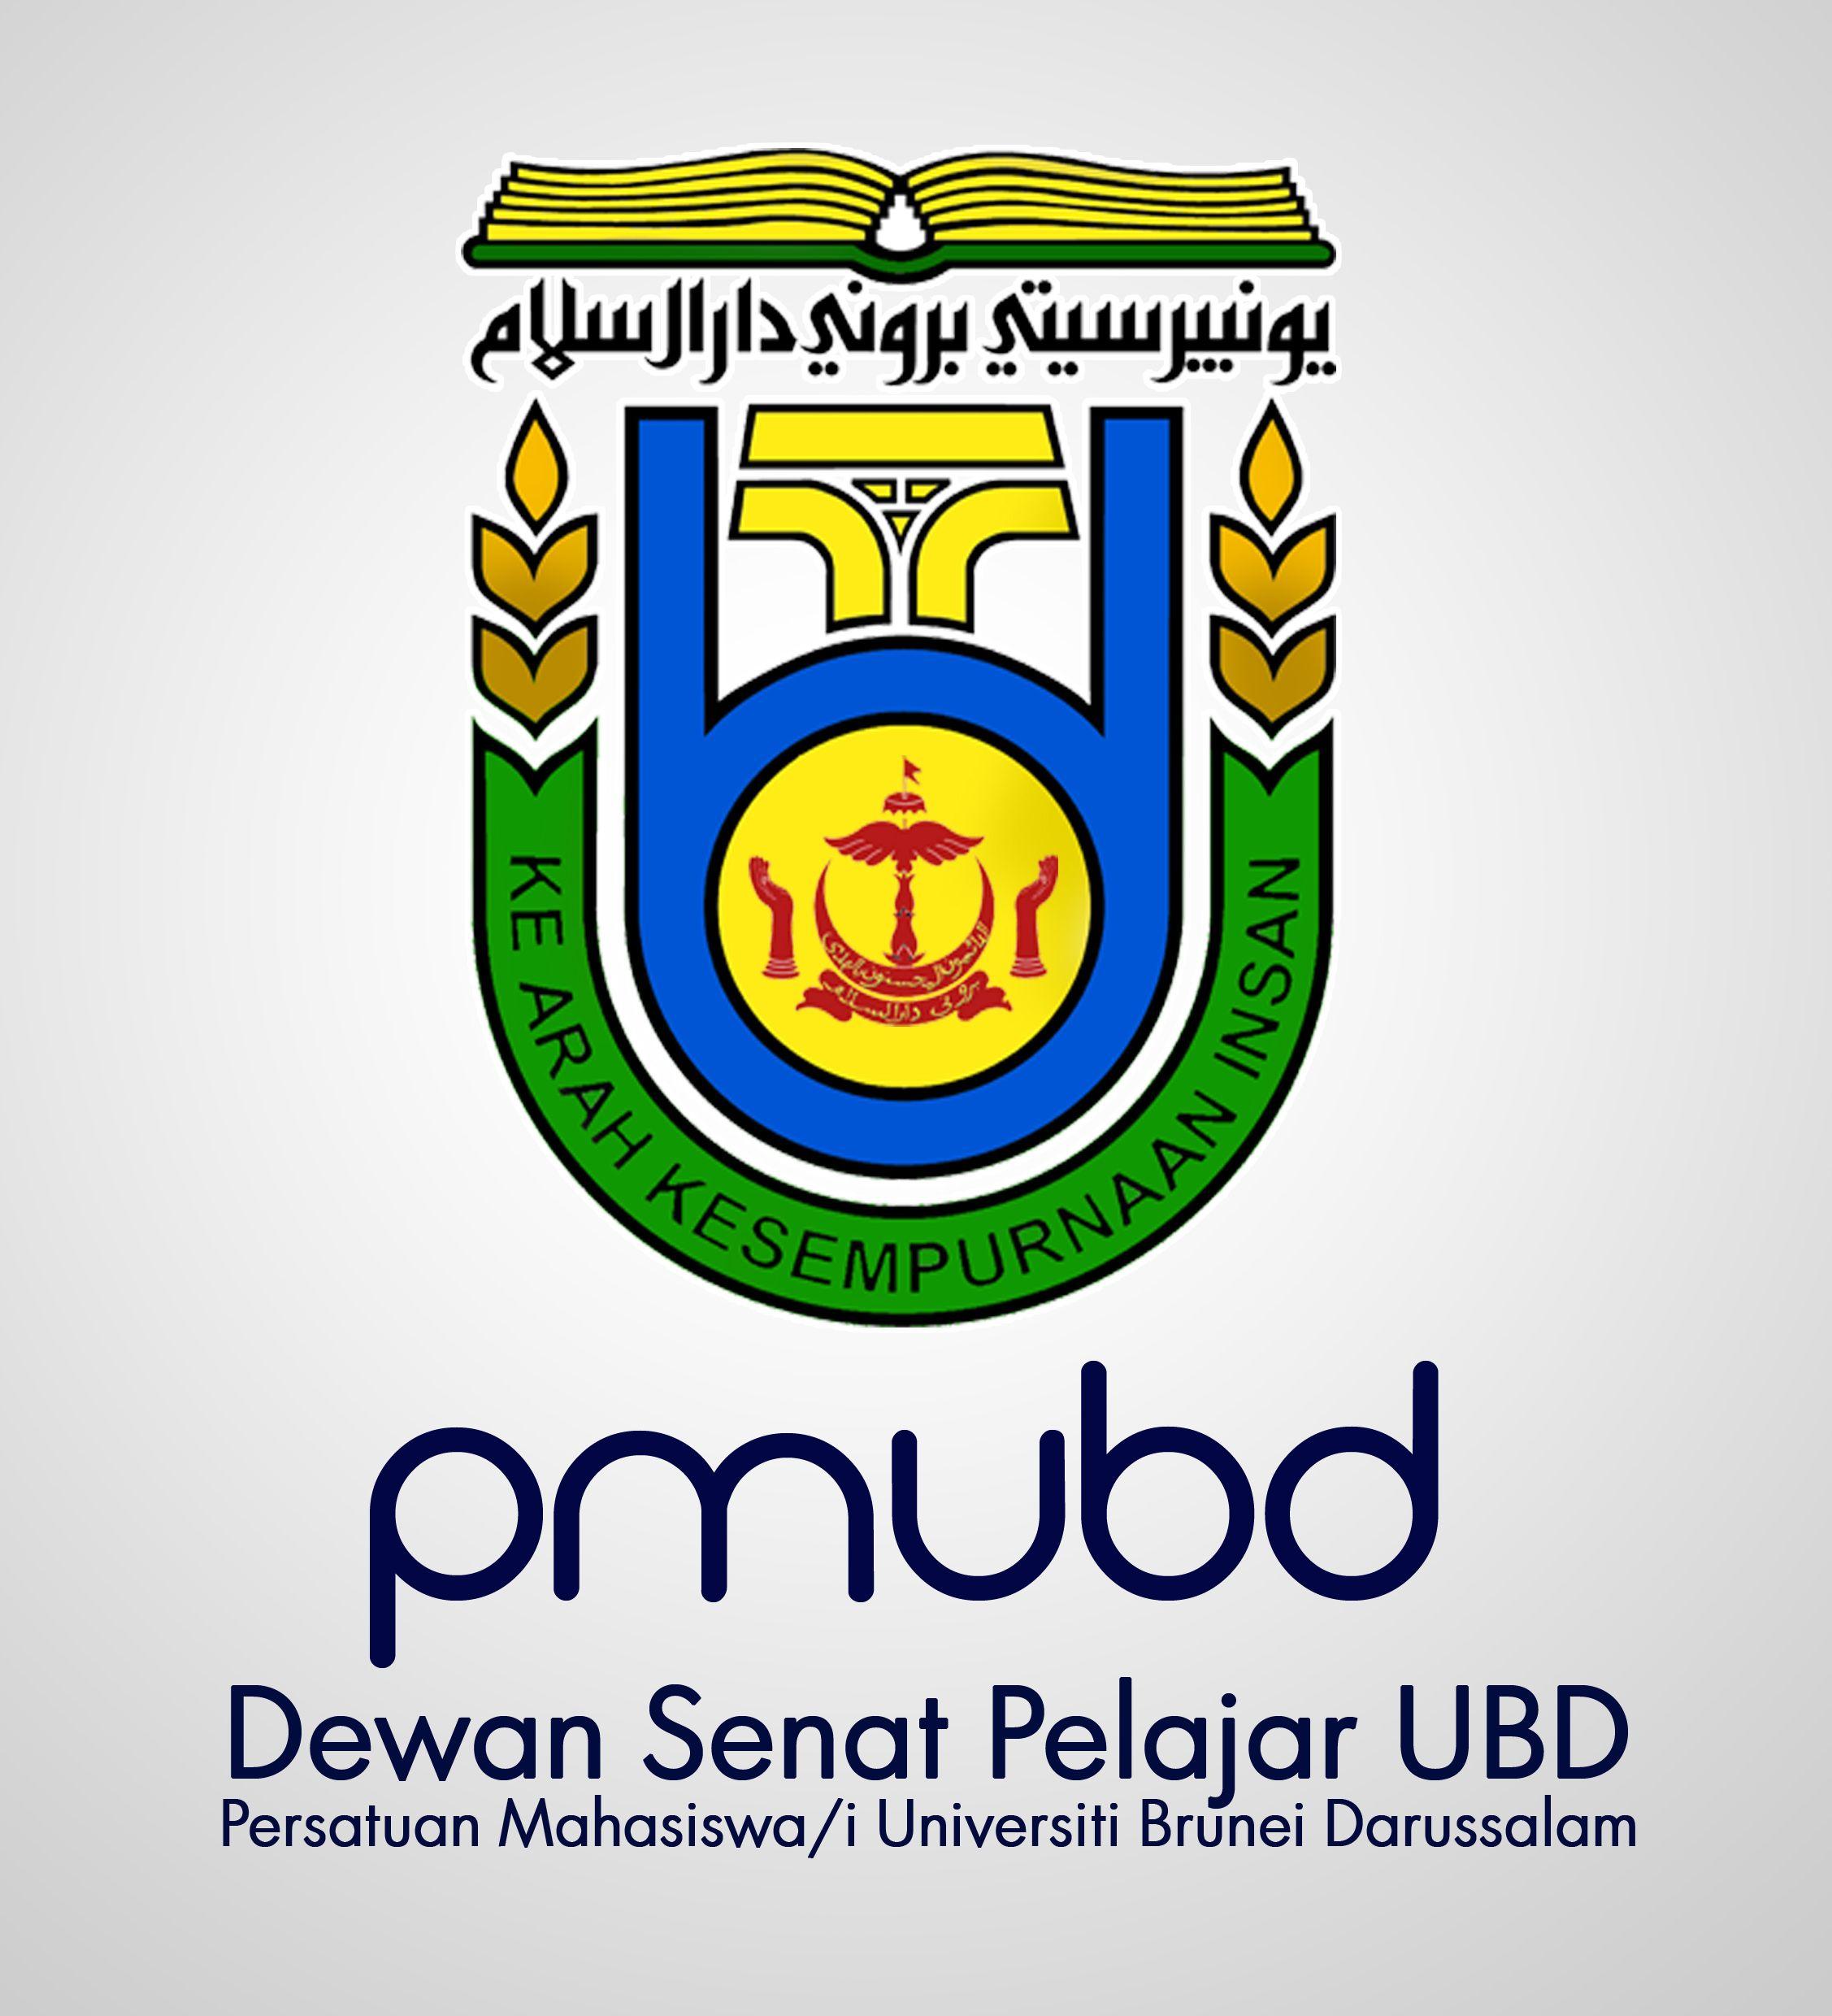 Senate Logo - Senate Logo | Persatuan Mahasiswa Mahasiswi Universiti Brunei ...